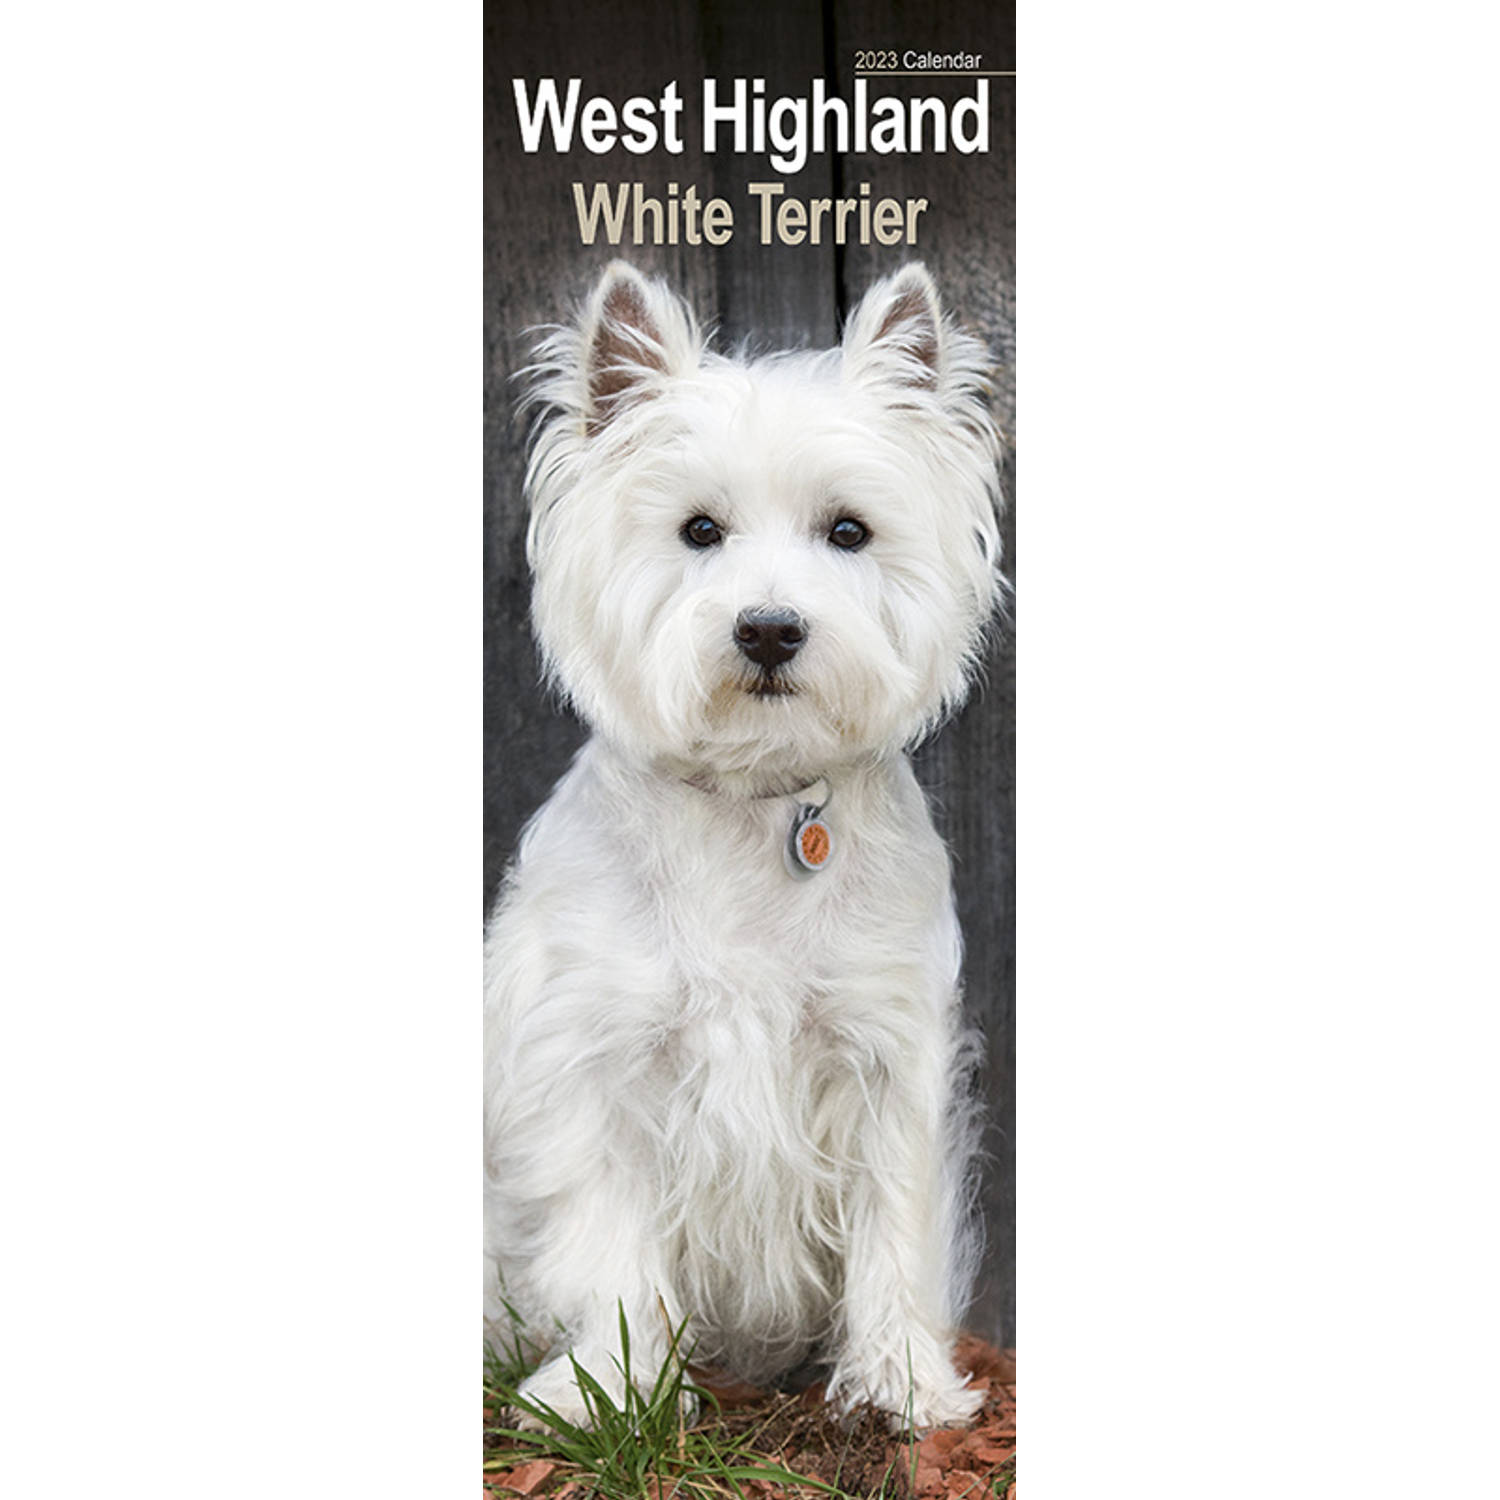 West Highland White Terrier Kalender 2023 Slimline